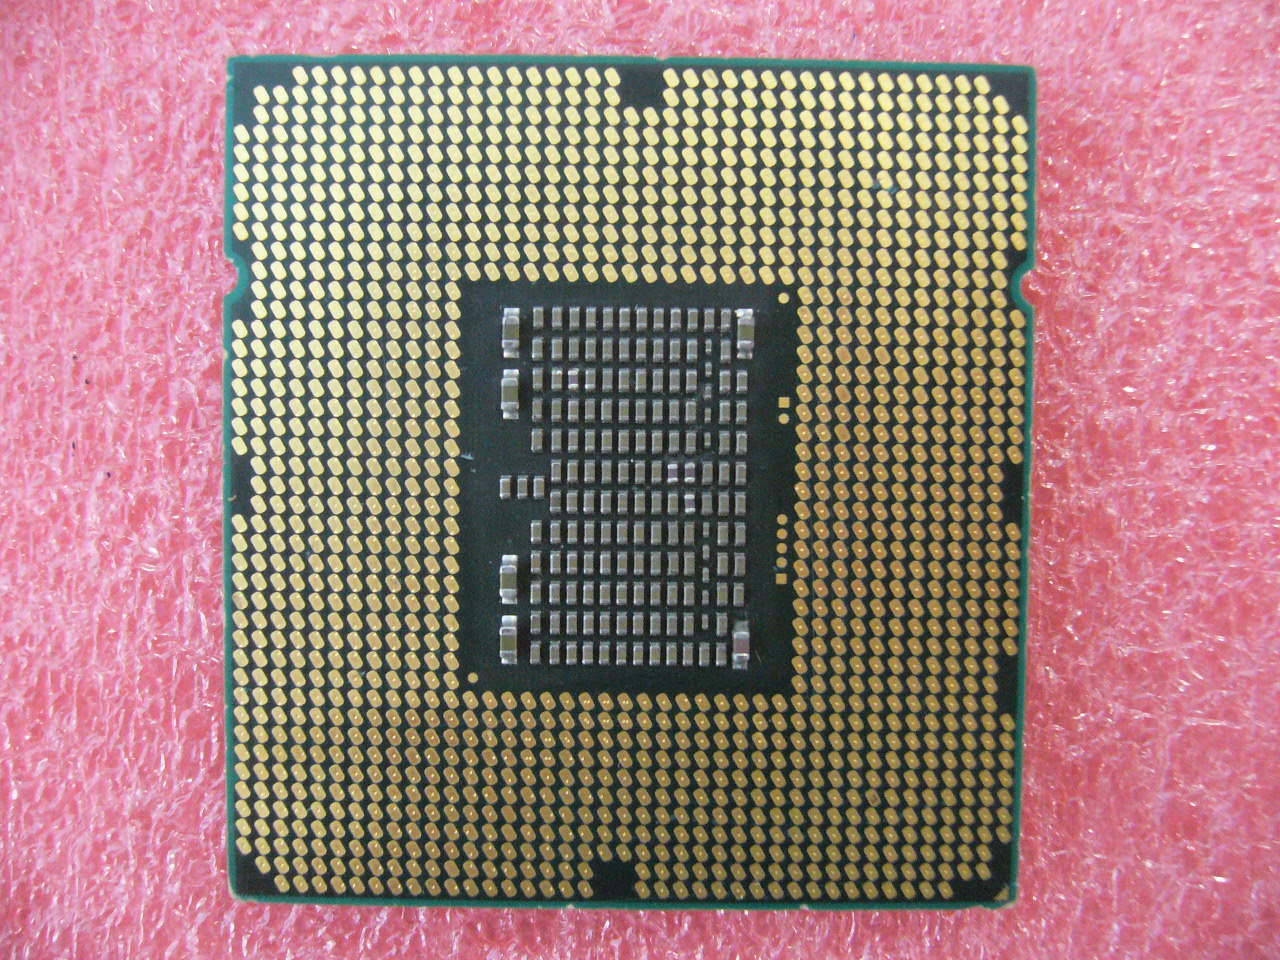 QTY 1x INTEL Hexa-Cores CPU i7-990X 3.46GHZ/12MB 6.4GT/s QPI LGA1366 SLBVZ - Click Image to Close